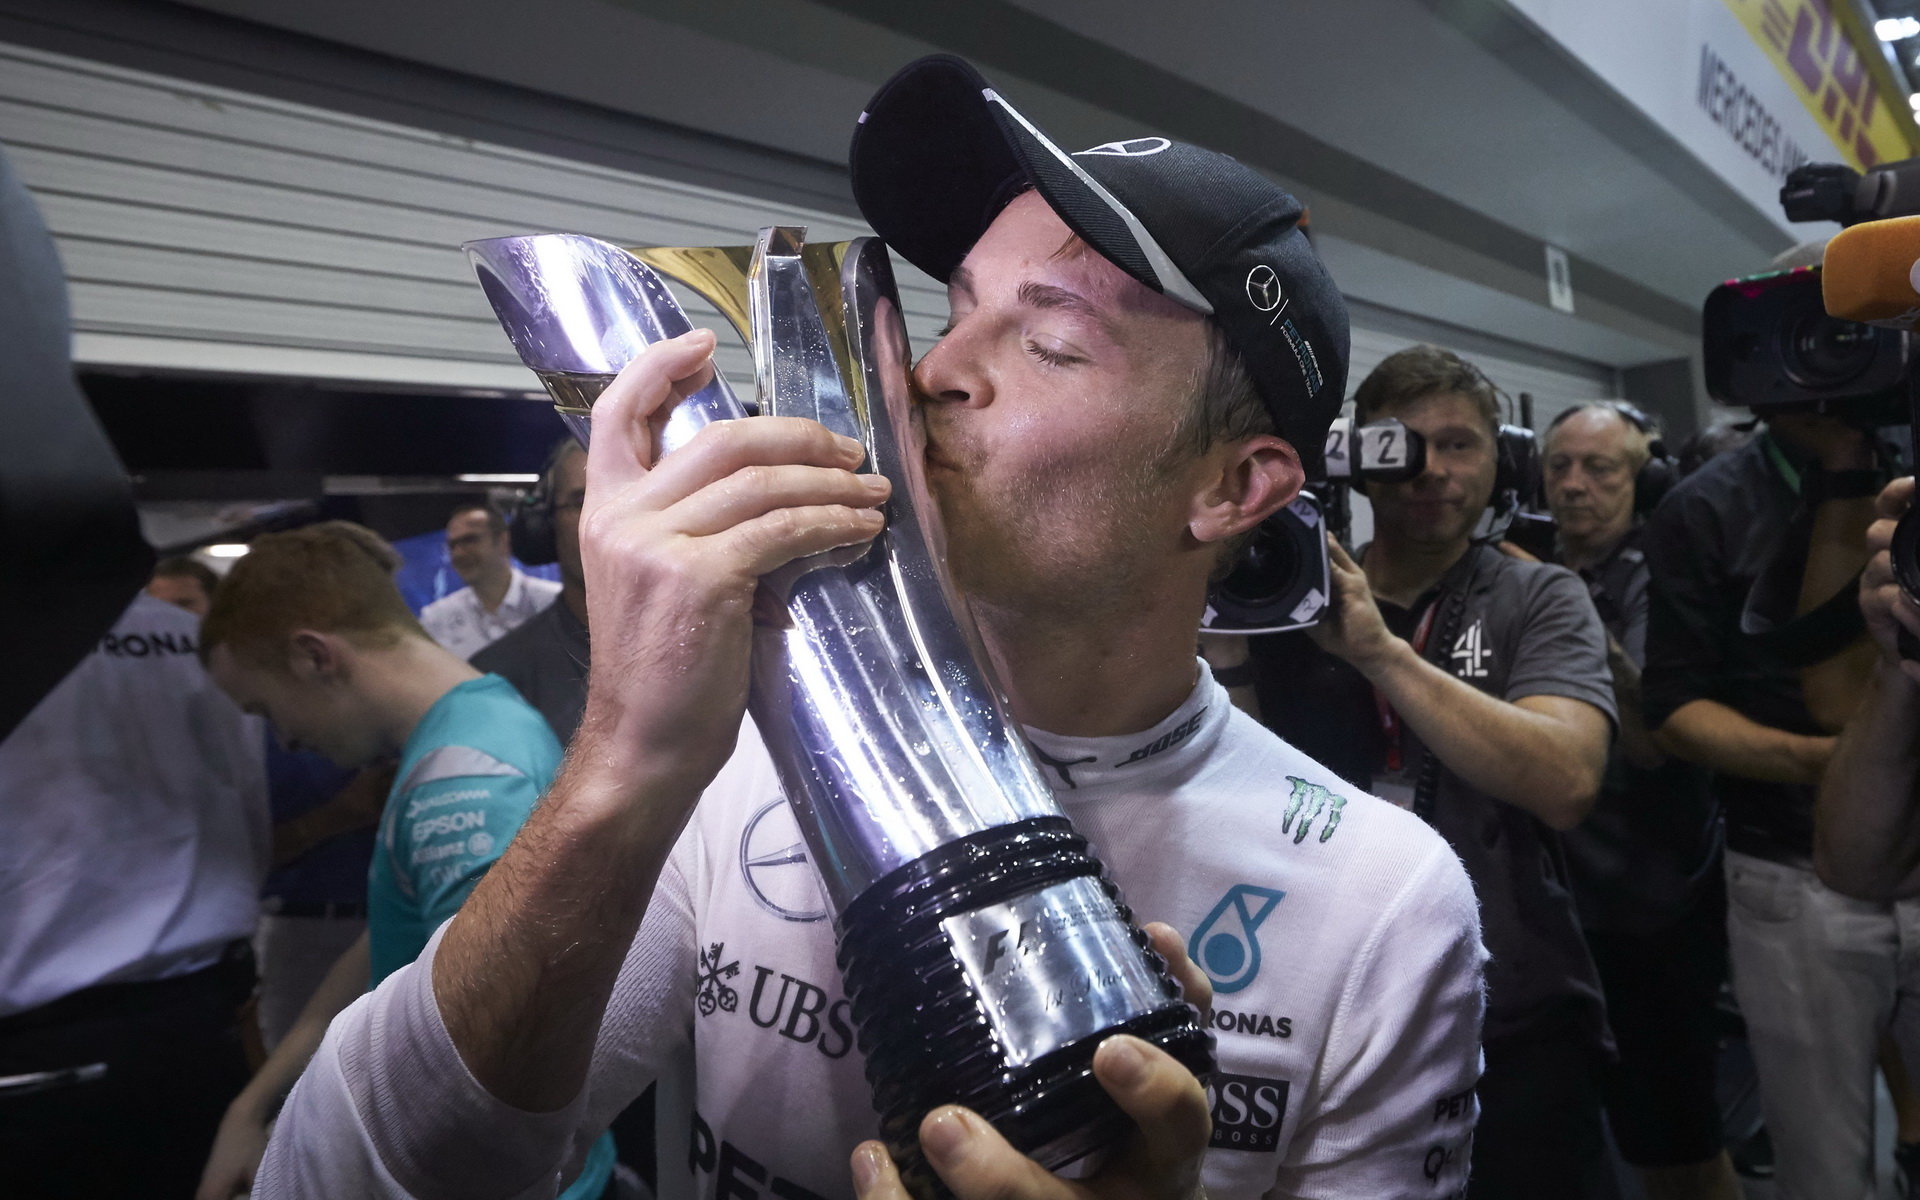 Nico Rosberg se svou trofejí po závodě v Singapuru